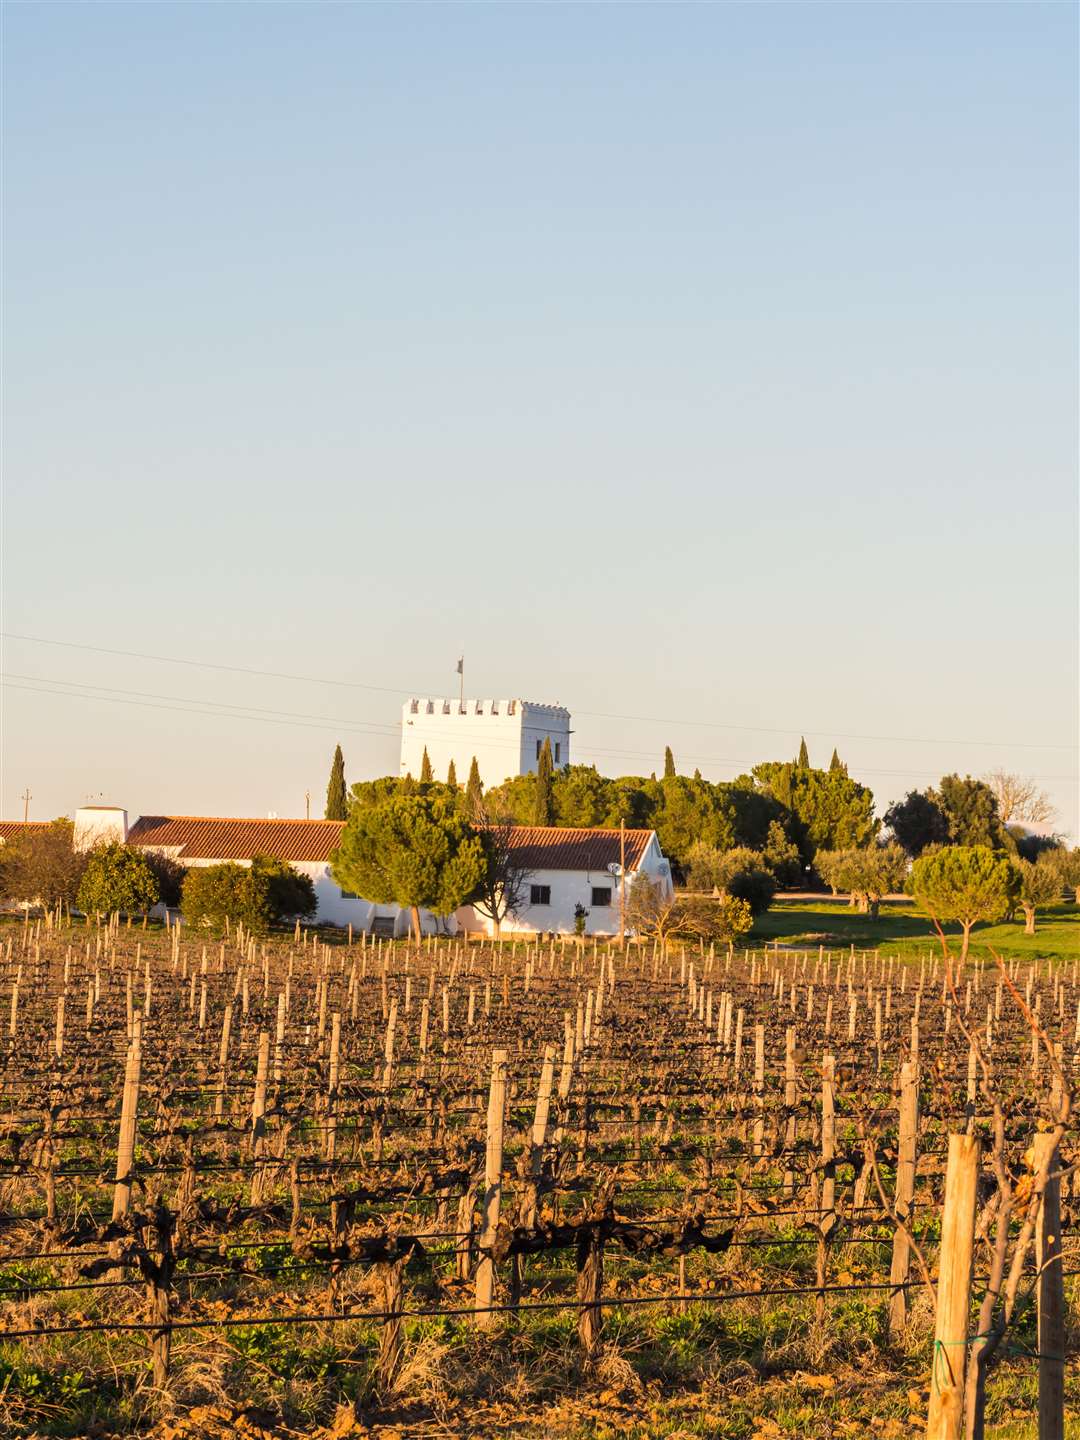 Vineyard in front of the Esporao Tower in Alentejo region, Portugal. Photo: Adobe Stock